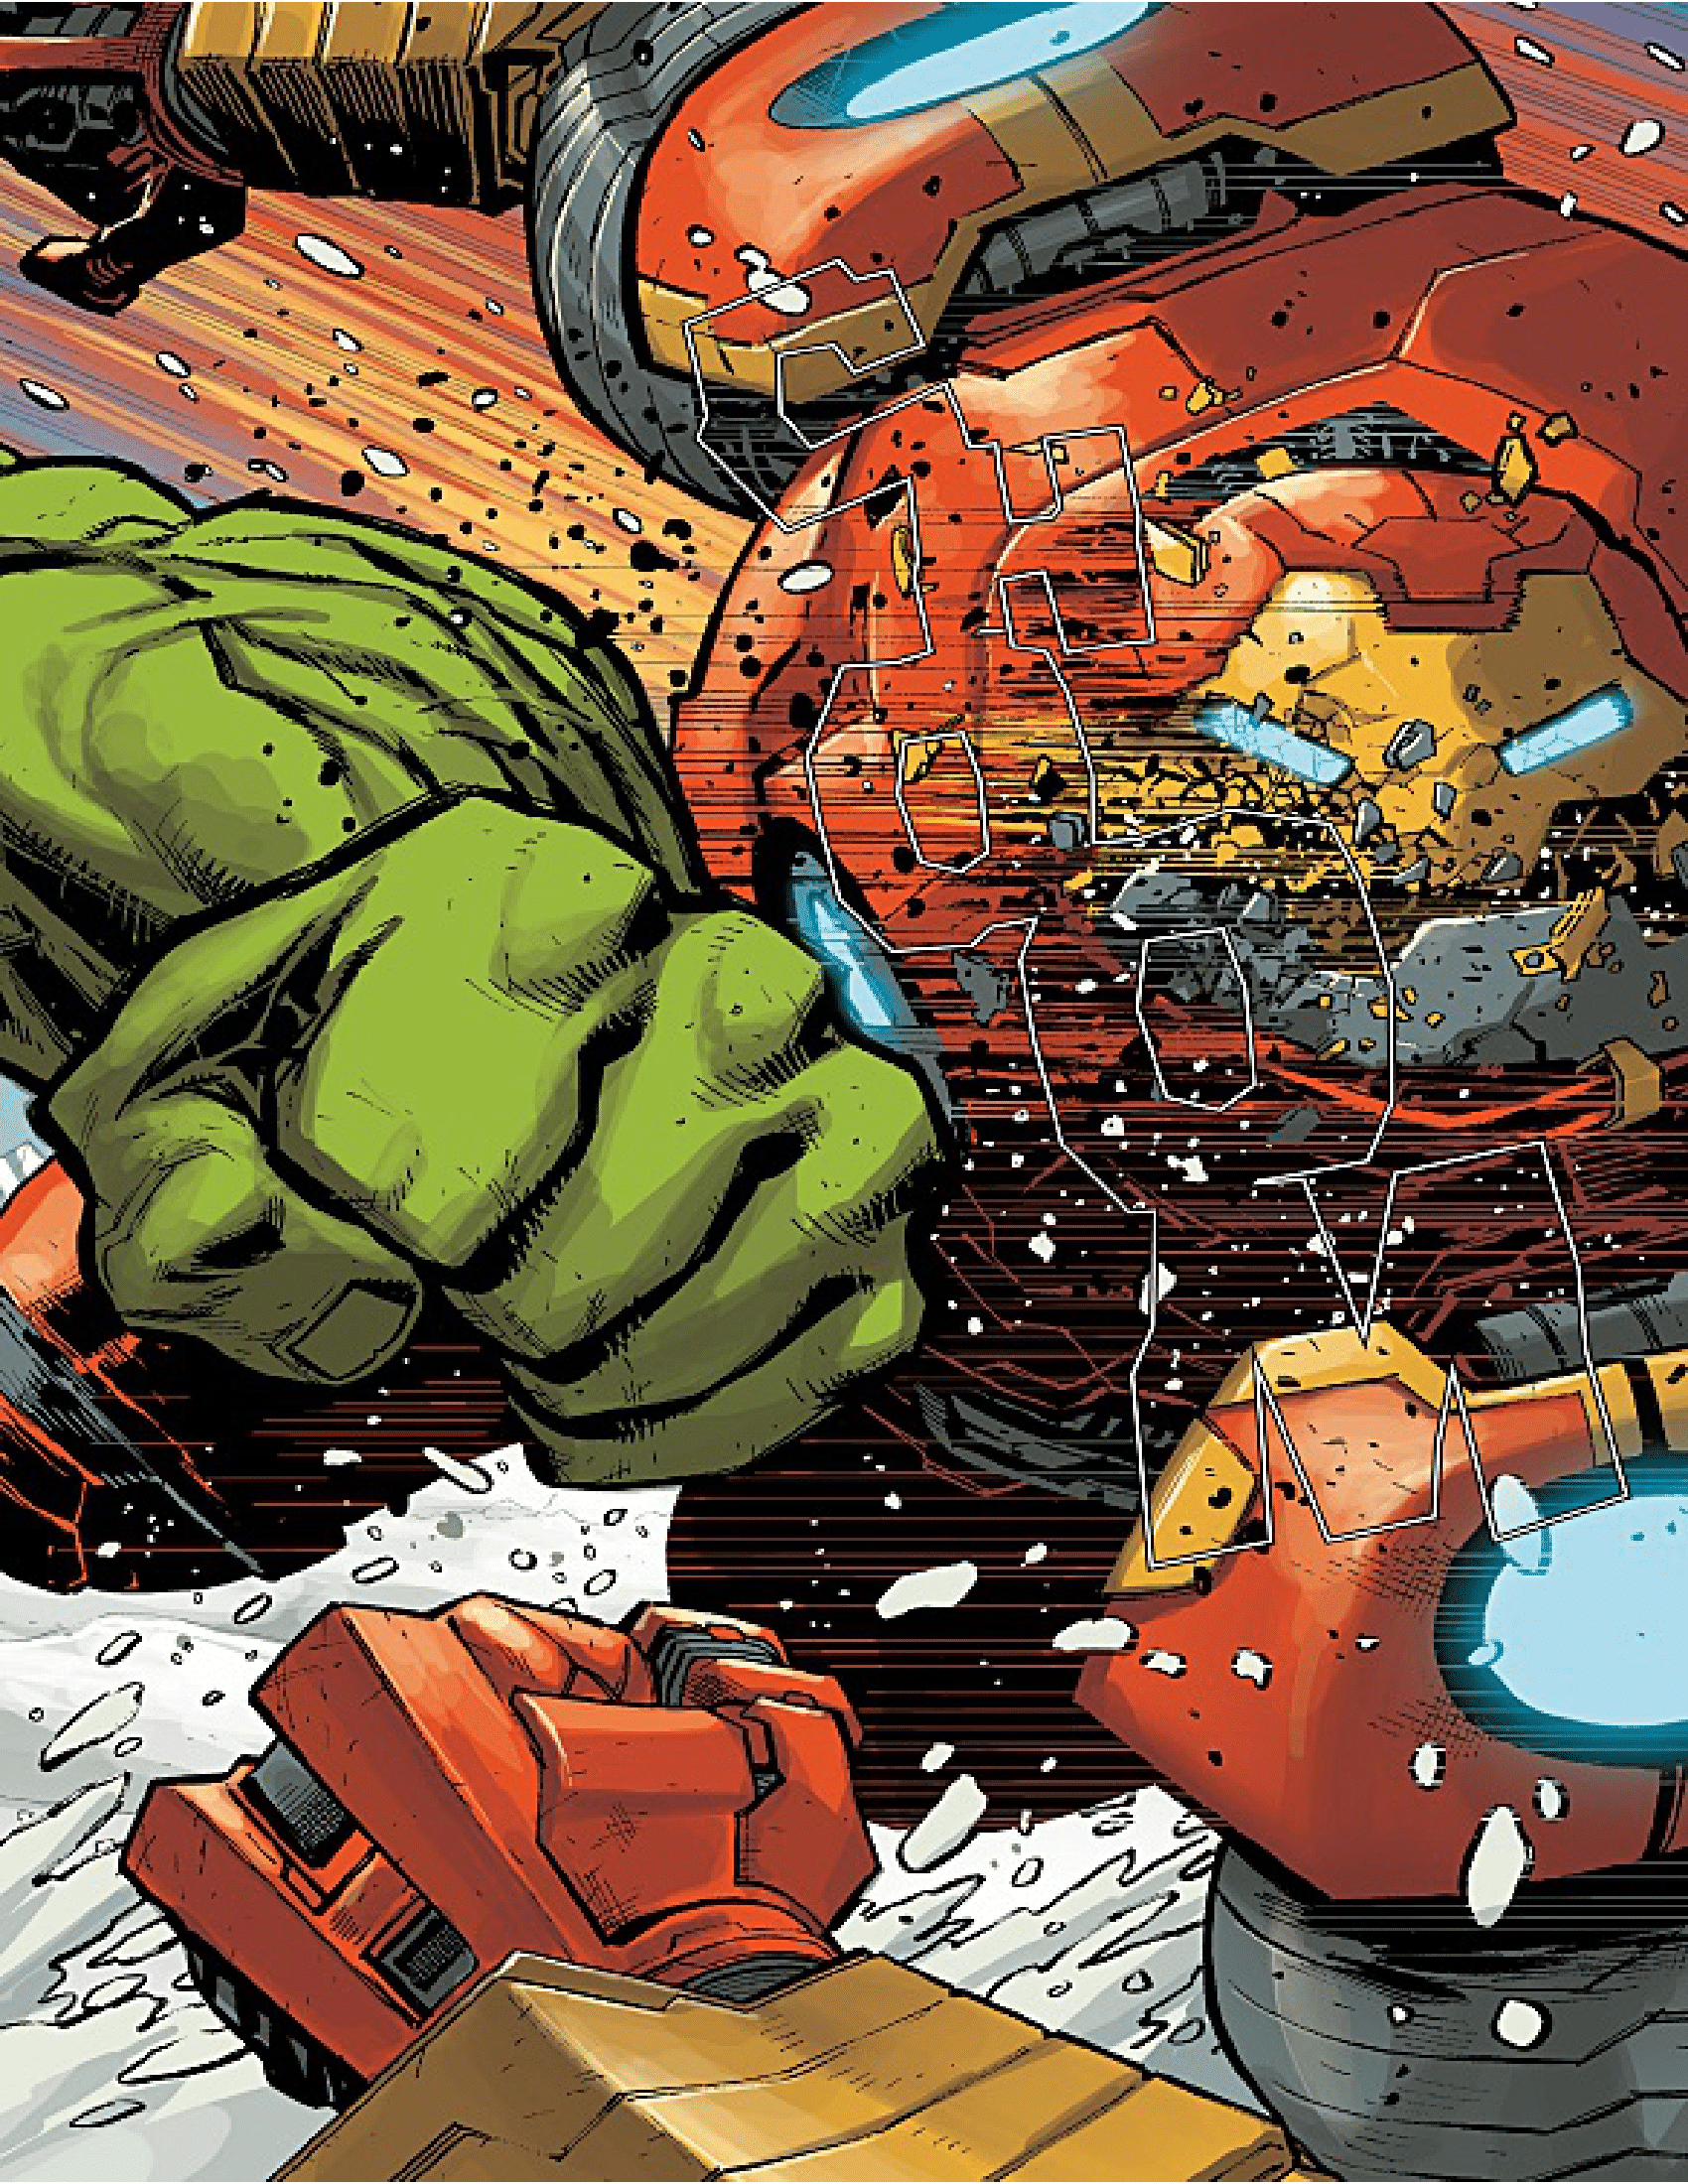 Marvel is ending Donny Cates & Ryan Ottley's Hulk run early